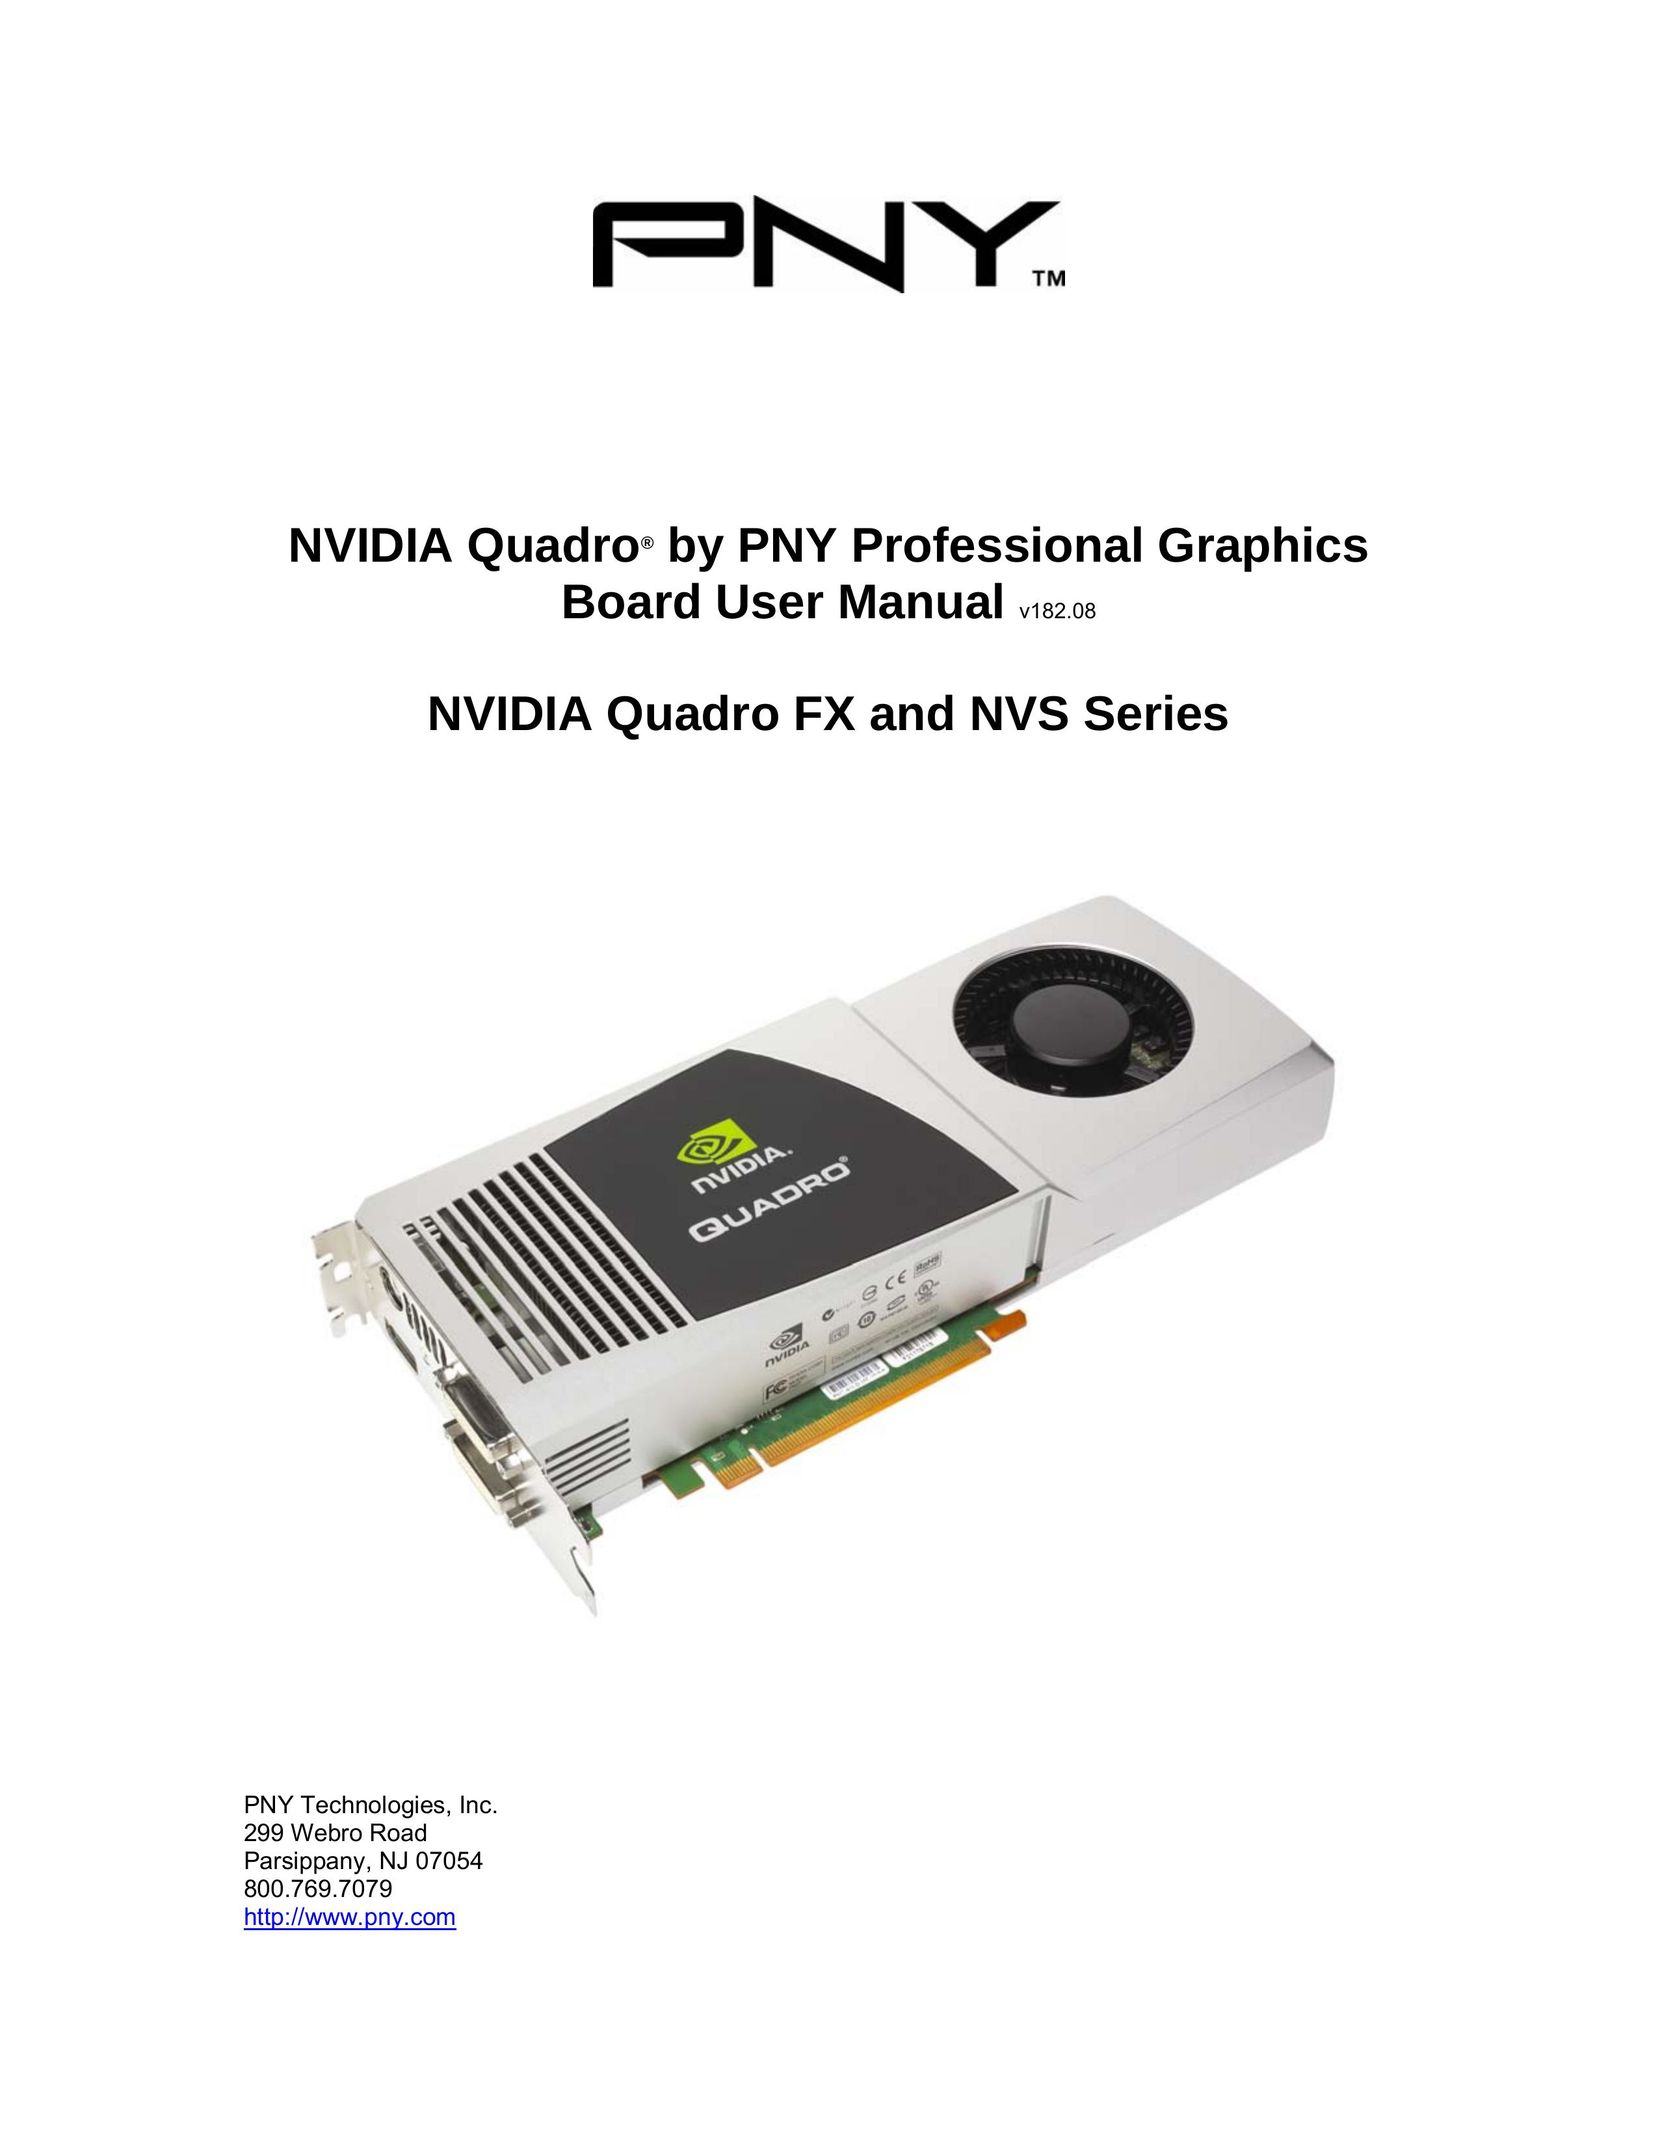 PNY NVS 295 Computer Hardware User Manual